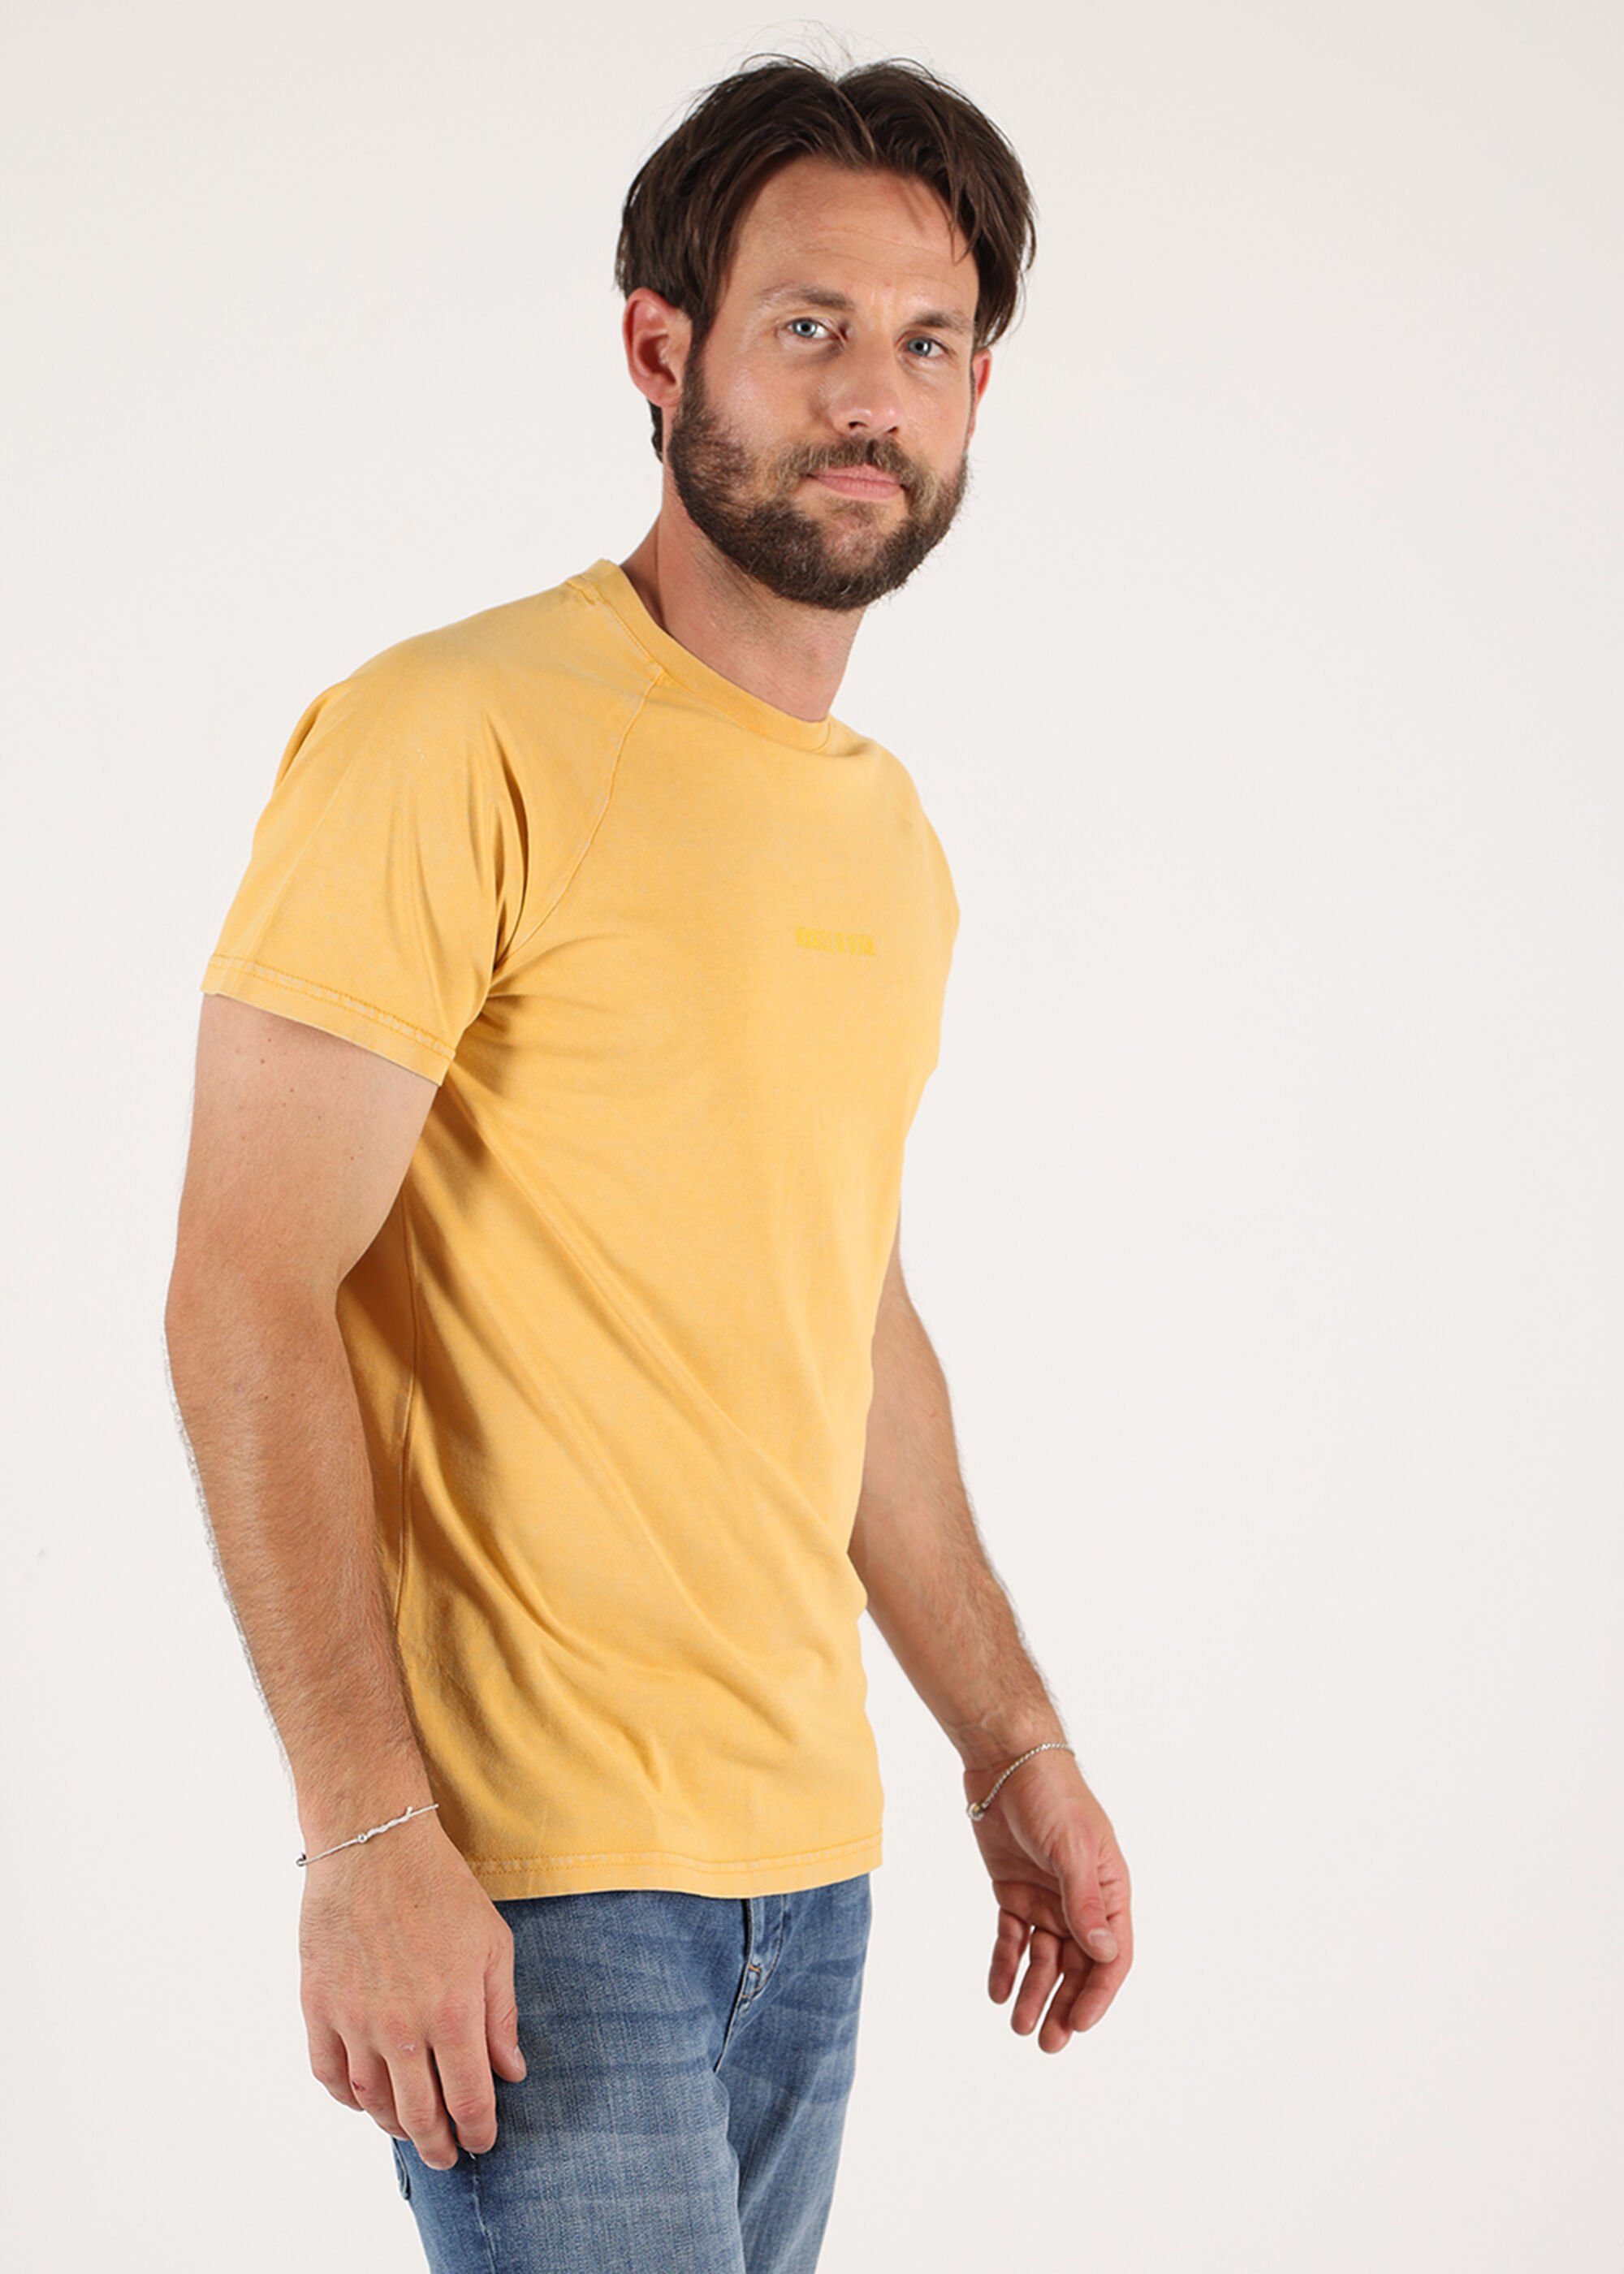 Design Denim Banana of Yellow T-Shirt unifarbenen im Miracle